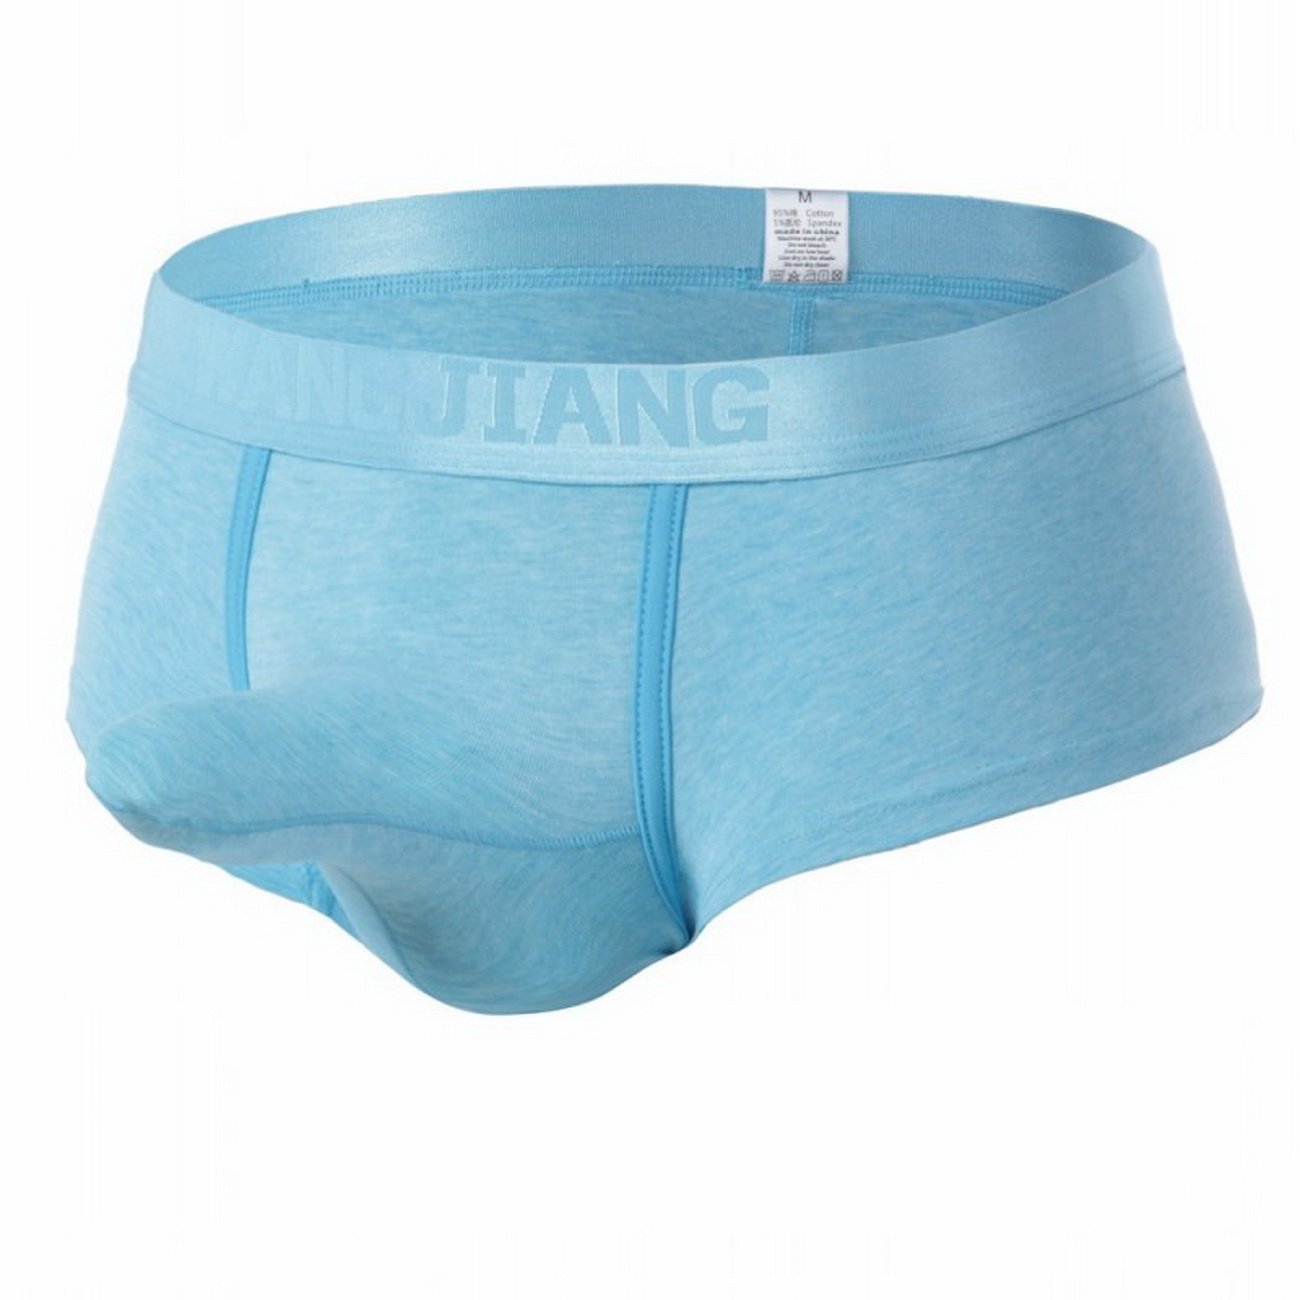 Wangjiang Sexy Men's Cotton underwear Physiological enhancing bulge Boxer briefs Blue #1026B